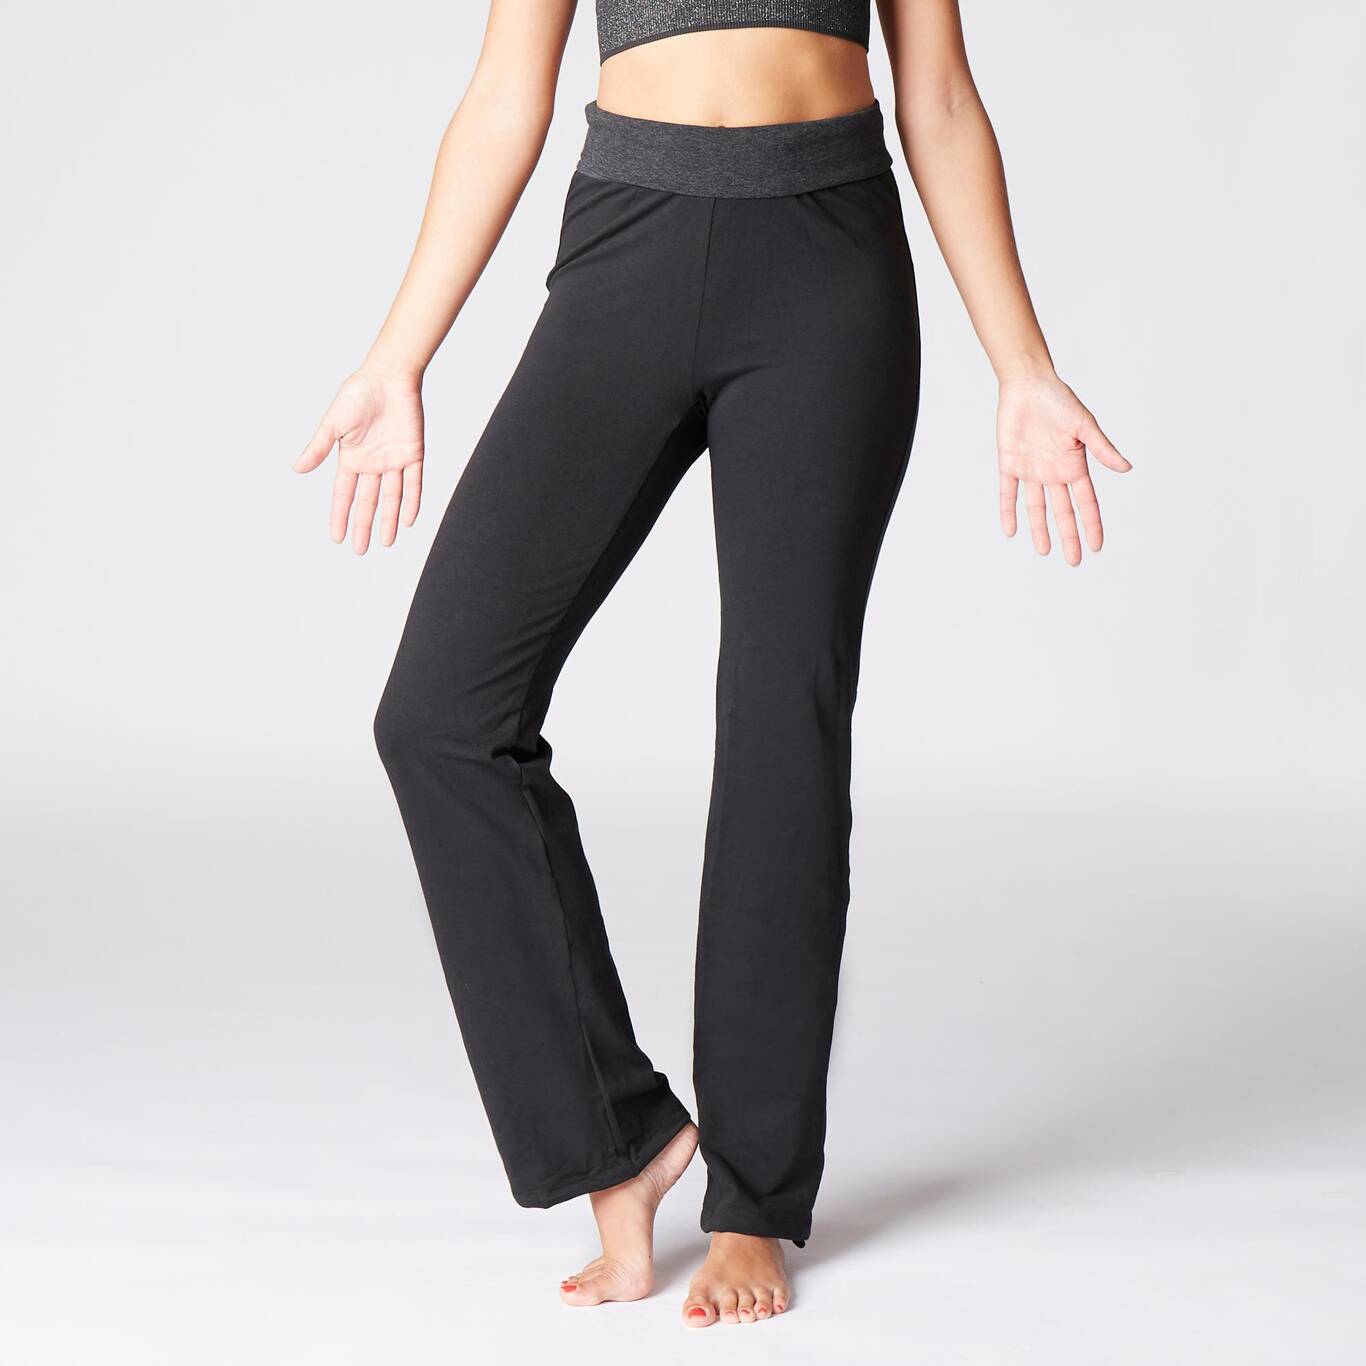 Celana Yoga Wanita Katun Ramah Lingkungan - Hitam/Abu-abu